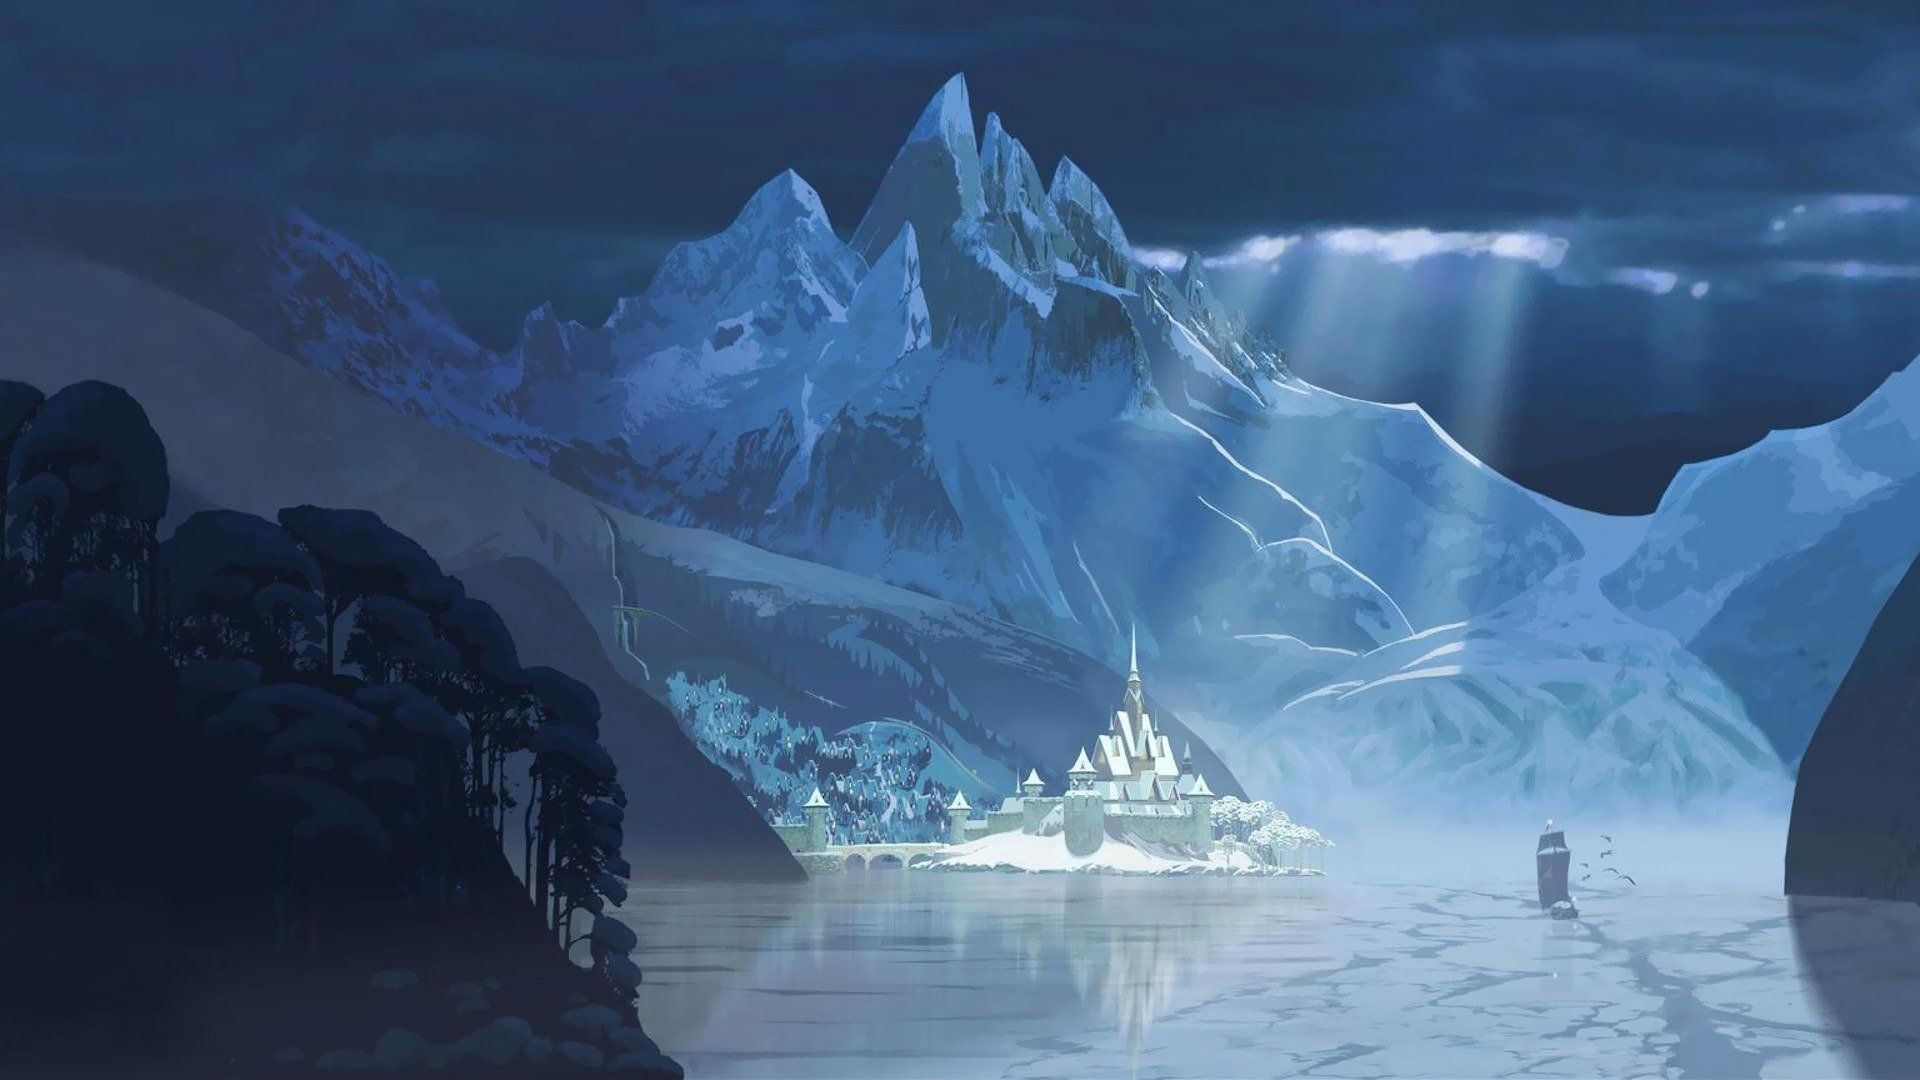 disney frozen disney cold heart arendelle erendell castle mountain. Frozen wallpaper, Frozen castle, Frozen movie